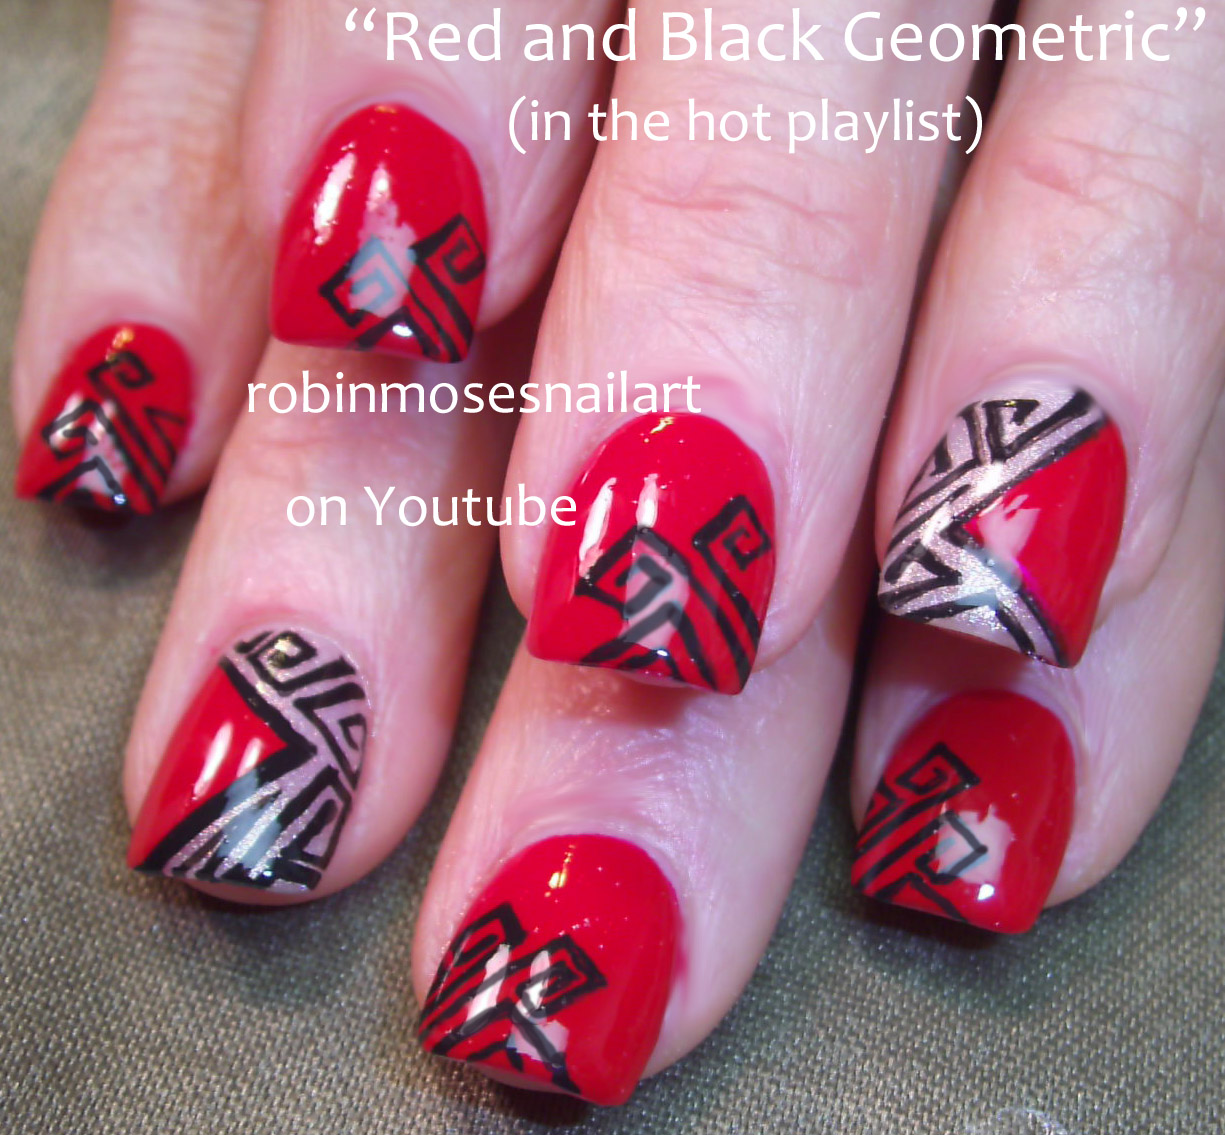 Robin Moses Nail Art: cute geometric nail art, sexy red and black ...